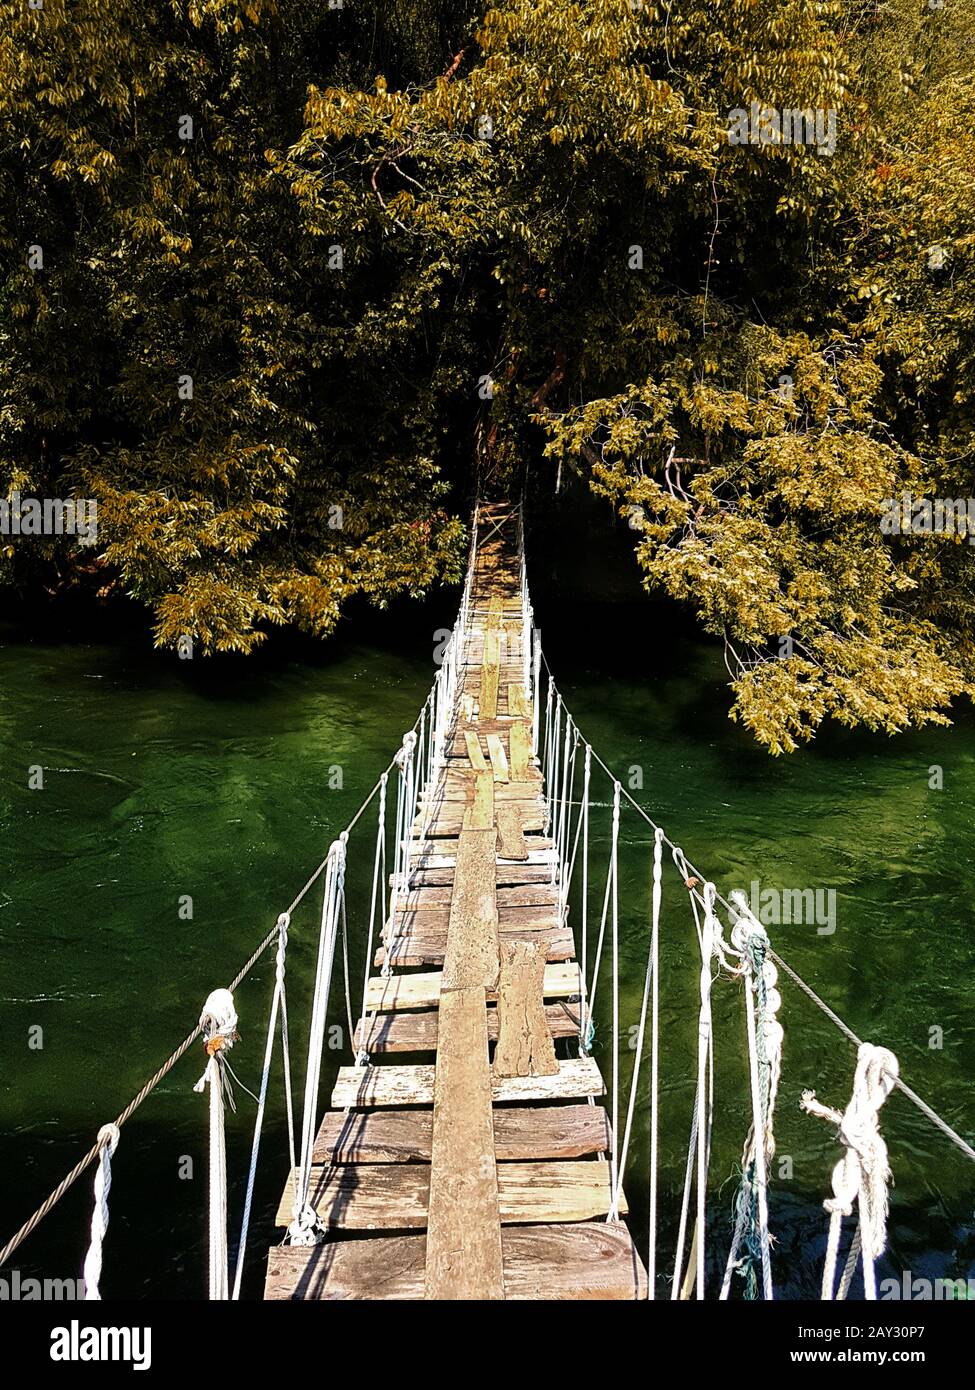 1,100+ Wood Hanging Bridge Stock Photos, Pictures & Royalty-Free